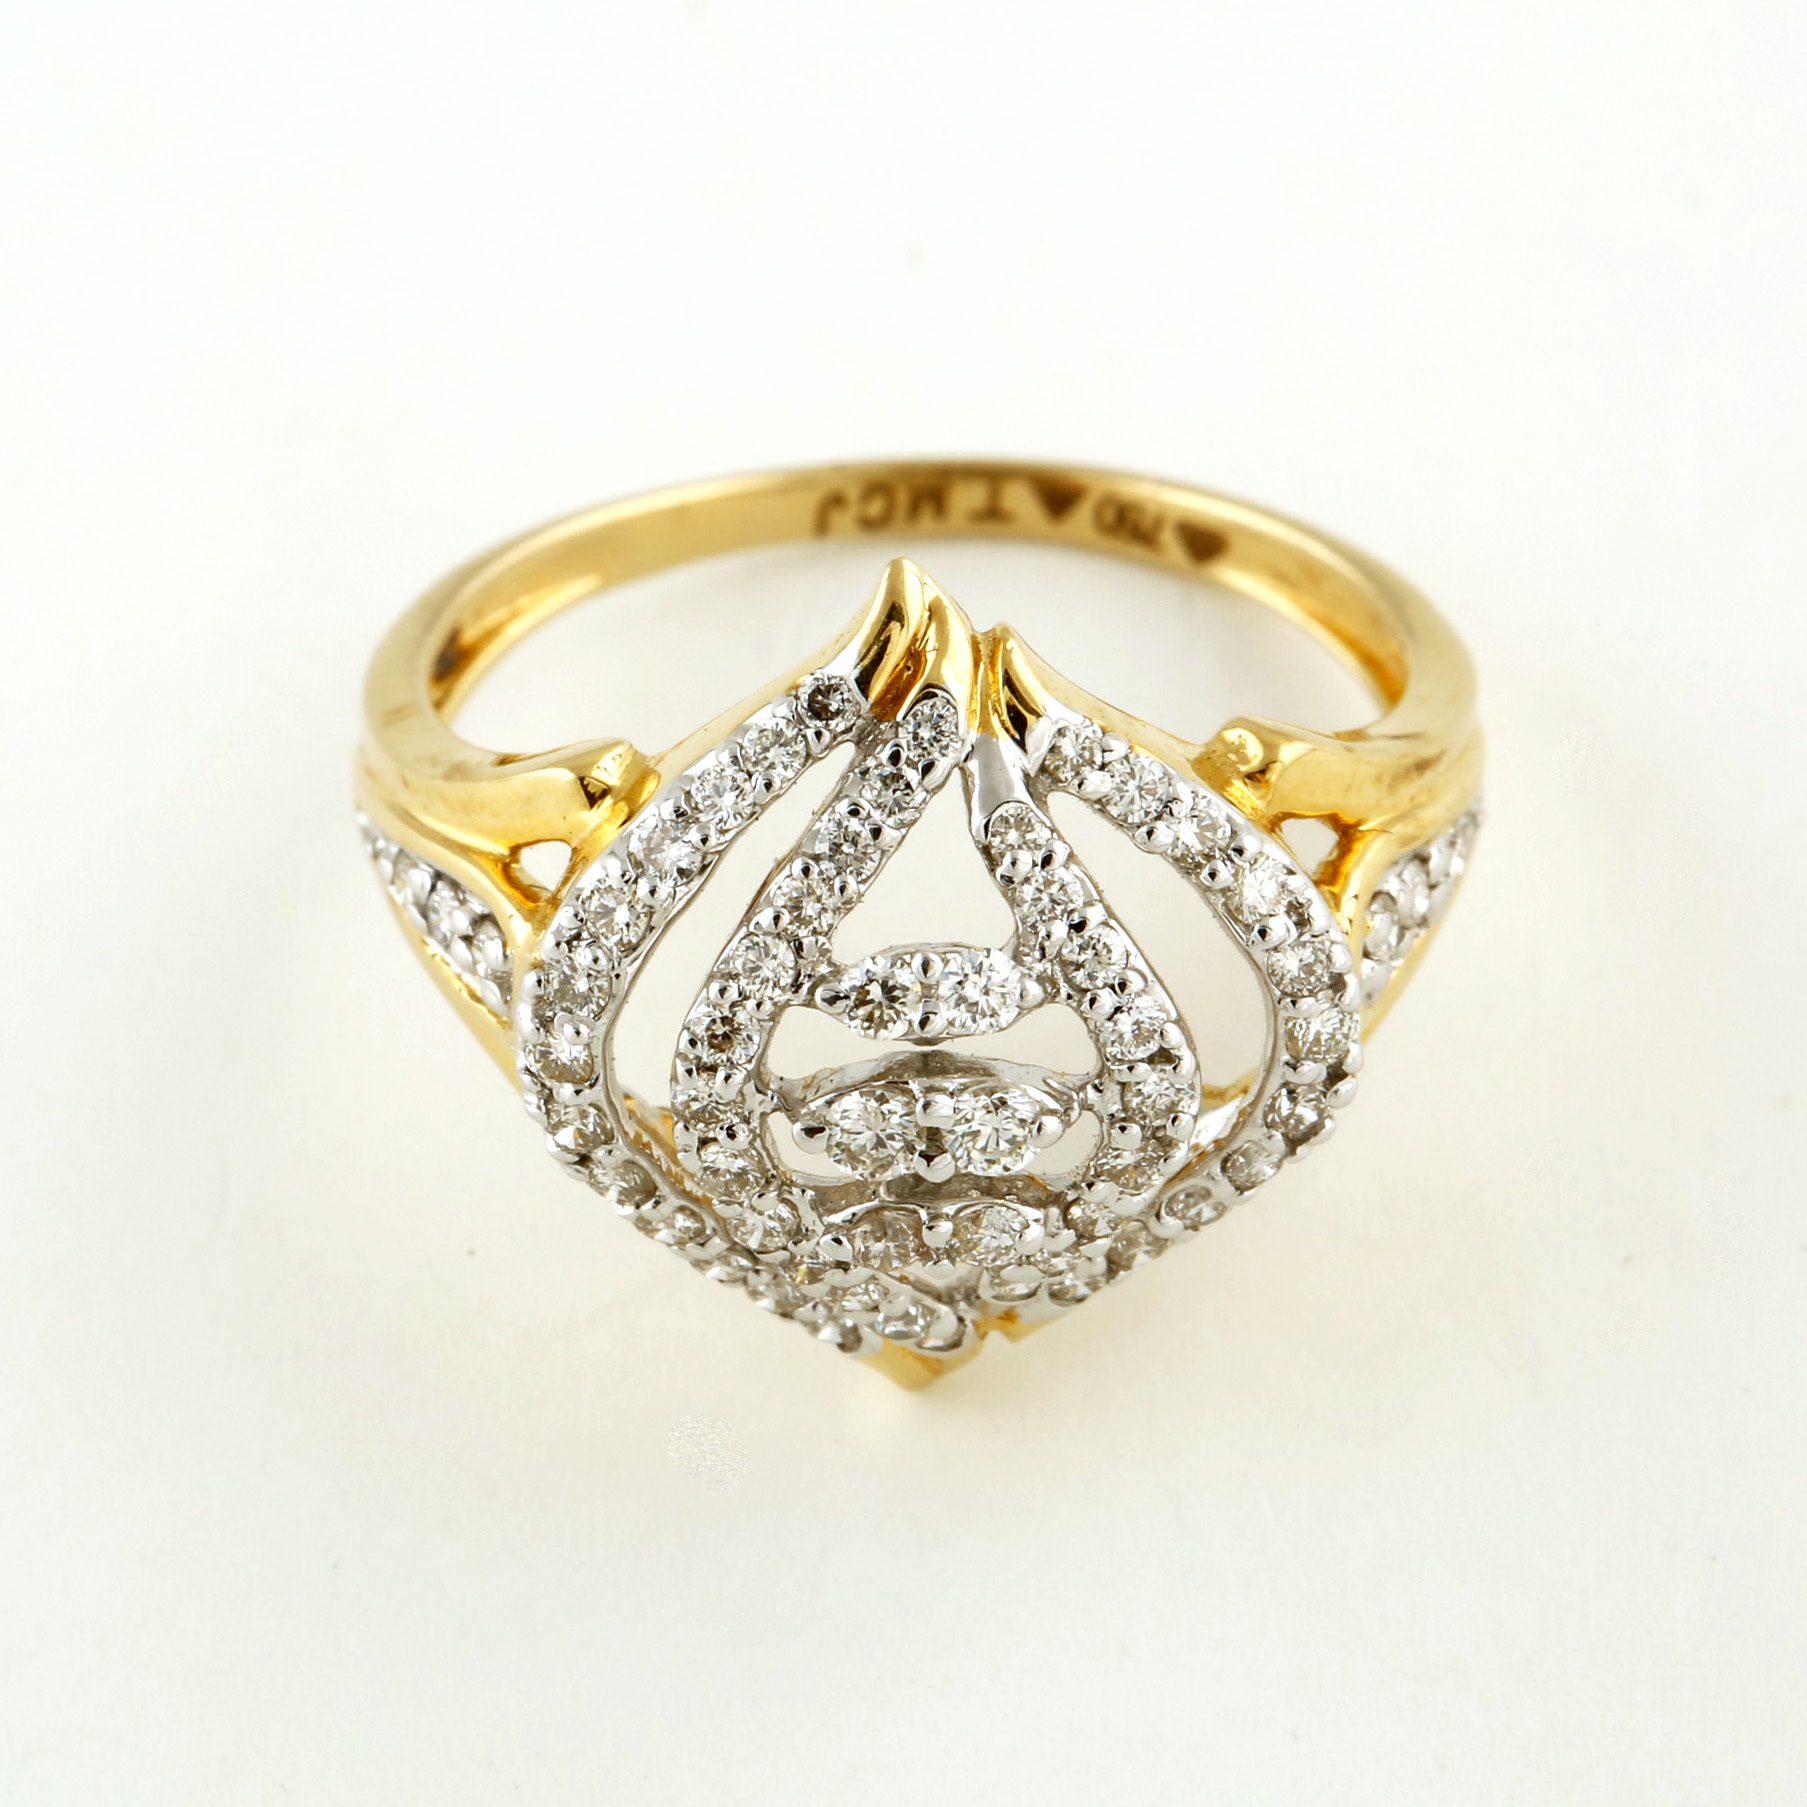 Buy quality Oval Shaped Pie Cut Diamond Engagement Ring in 18k White Gold -  VVS - VS - FG - 2.210 grams - 0.38 carat - 0LR43 in Pune